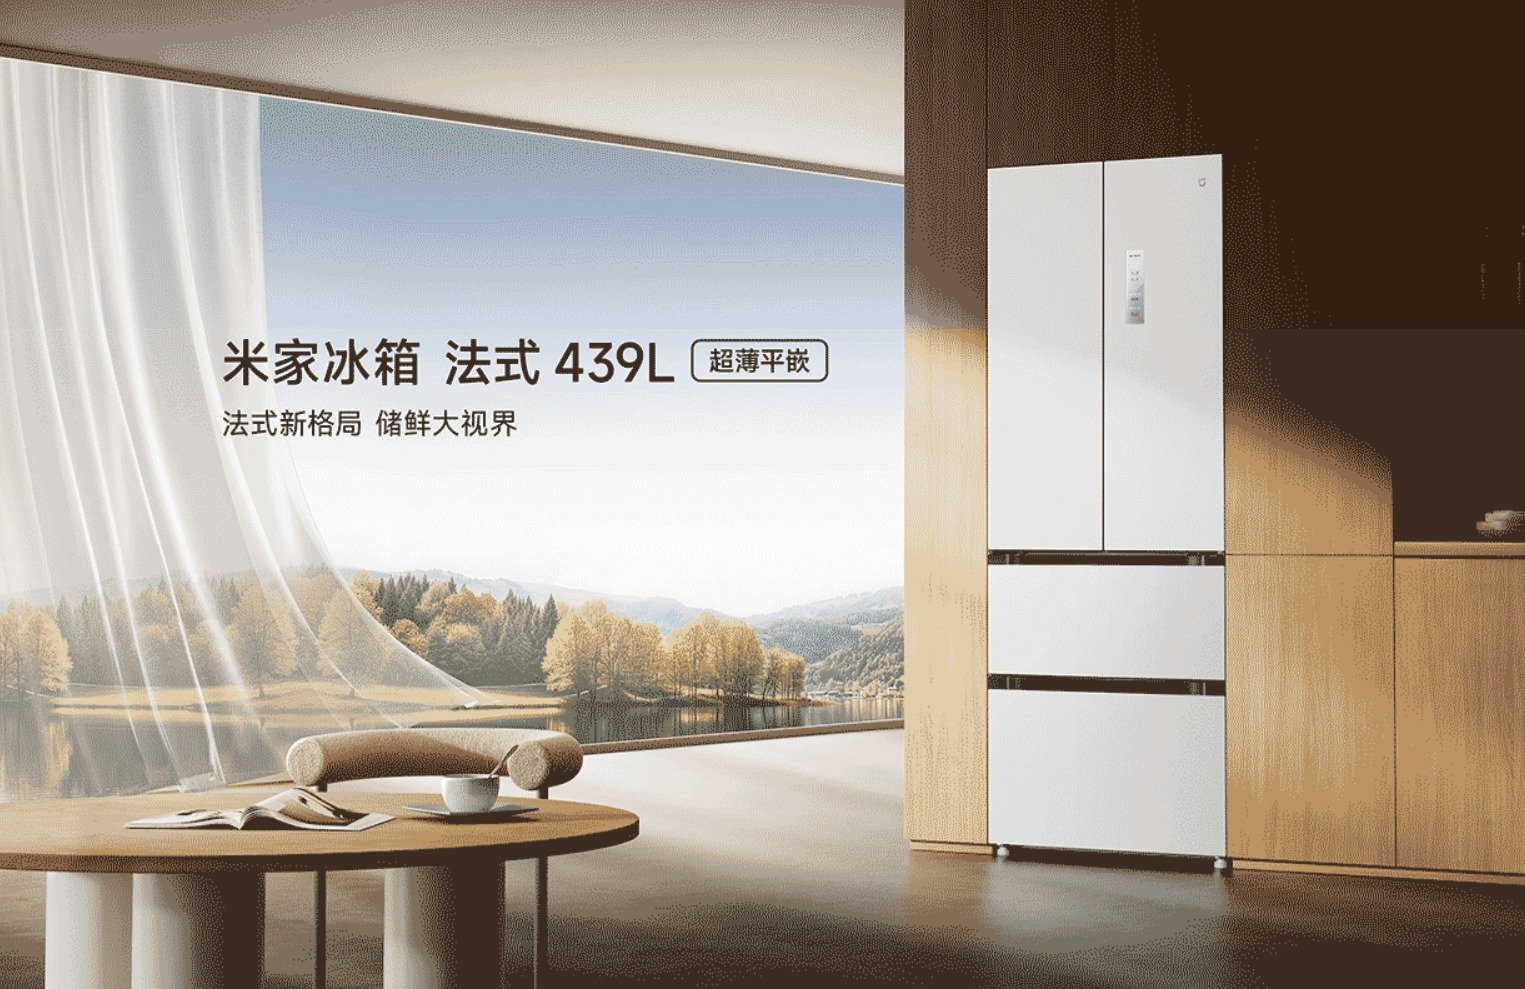 Xiaomi Mijia フレンチスタイル冷蔵庫 439L が中国で発売